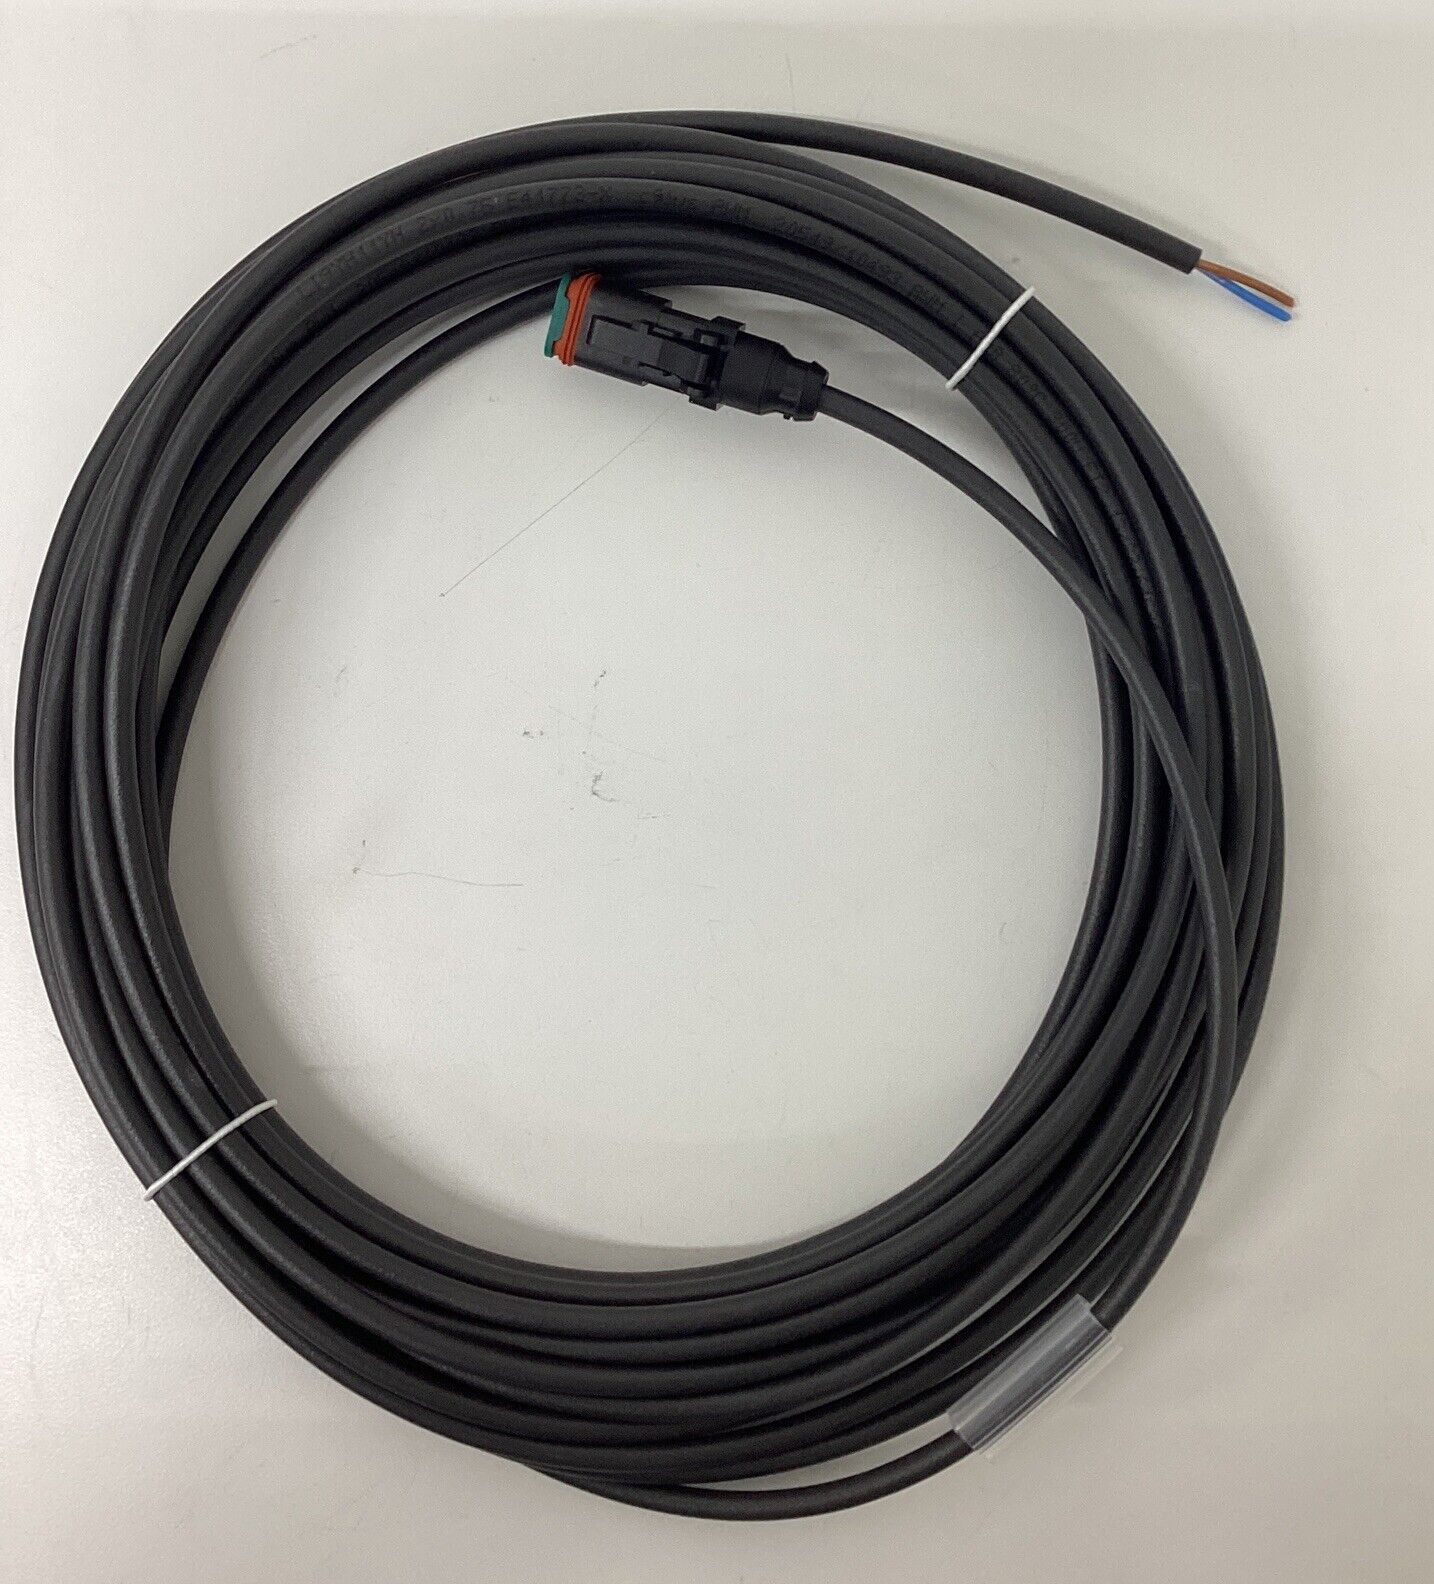 Murr 7072-72011-7541000 2-Wire MDC06 Valve Plug Single End Cable 10M (CL361)